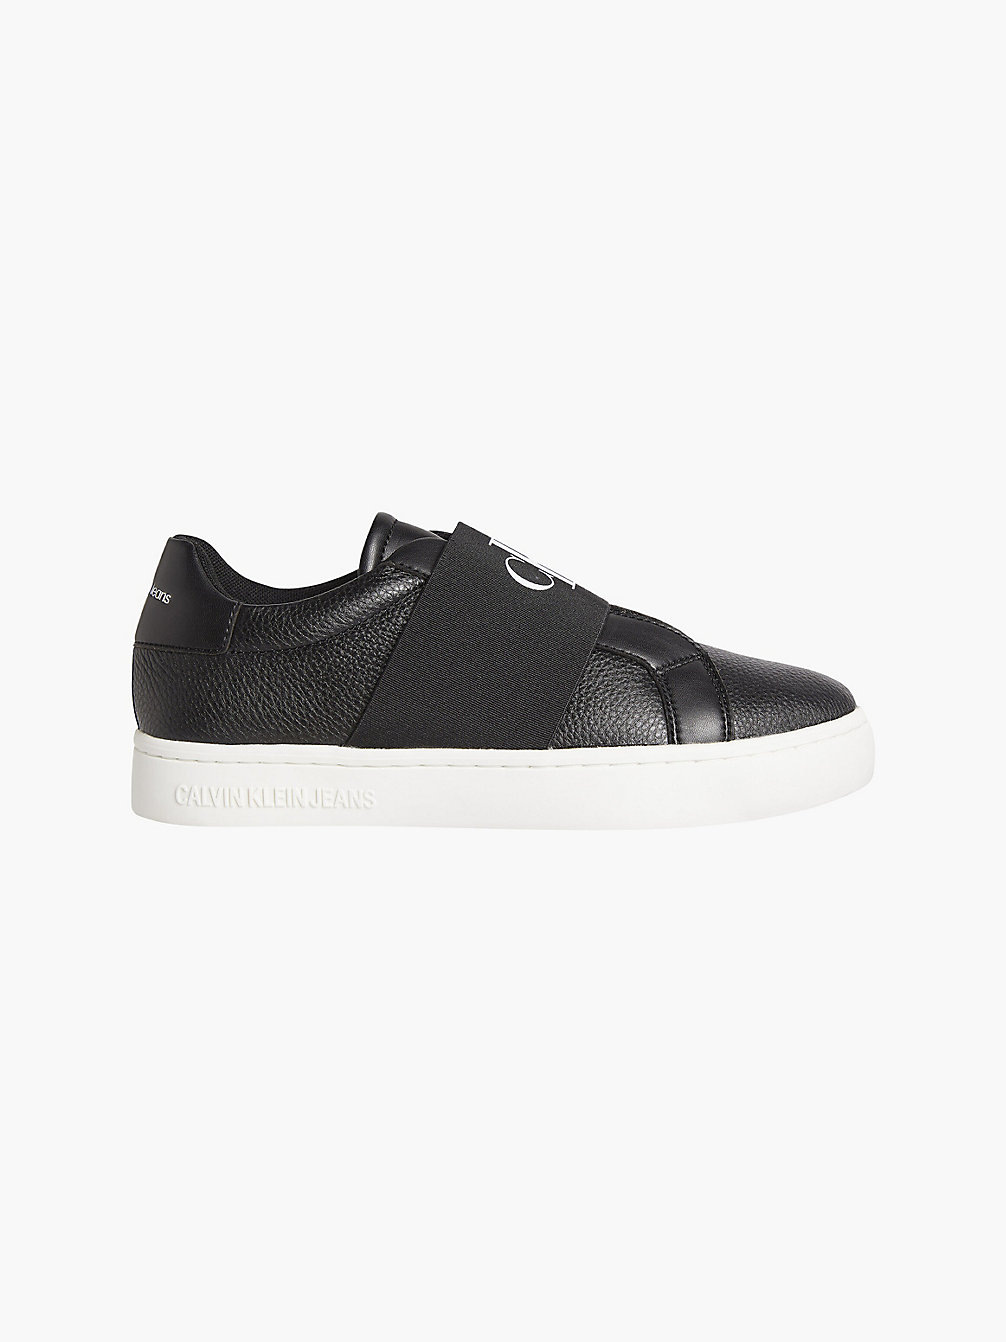 BLACK Leather Slip-On Shoes undefined women Calvin Klein